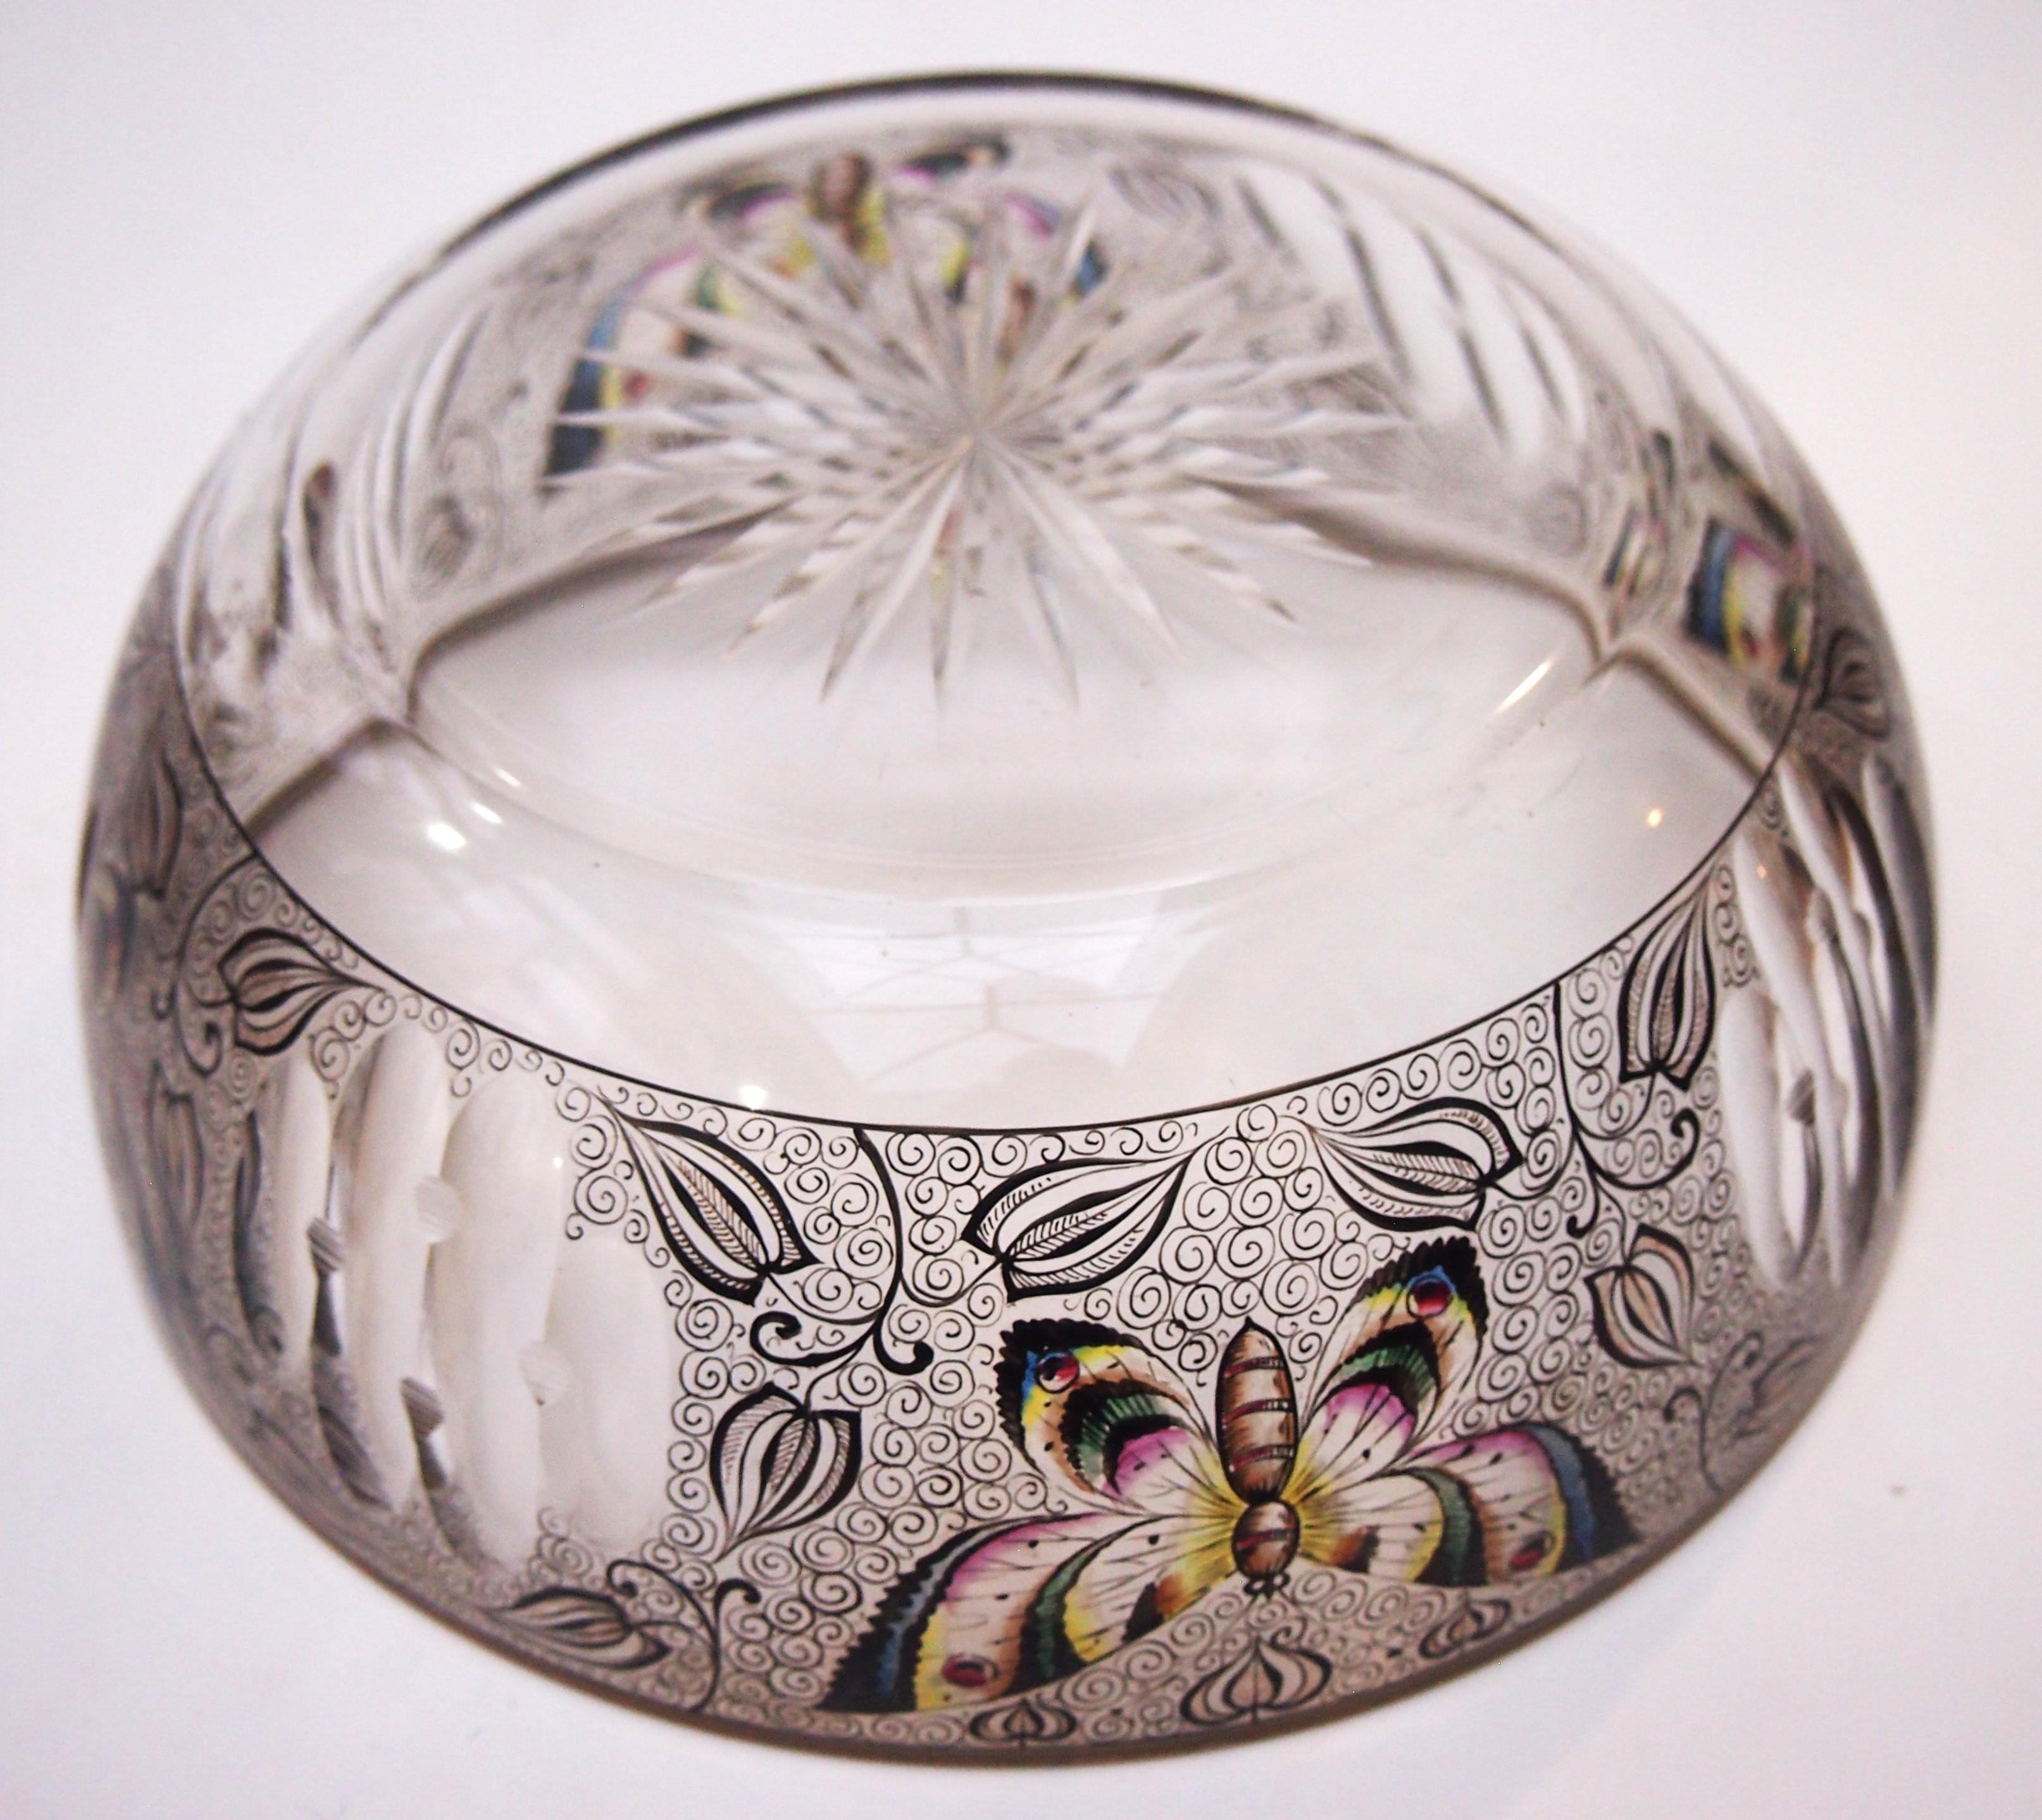 Art Glass Fabulous Enamelled Butterfly Bowl from Fachschule Haida Glass School For Sale